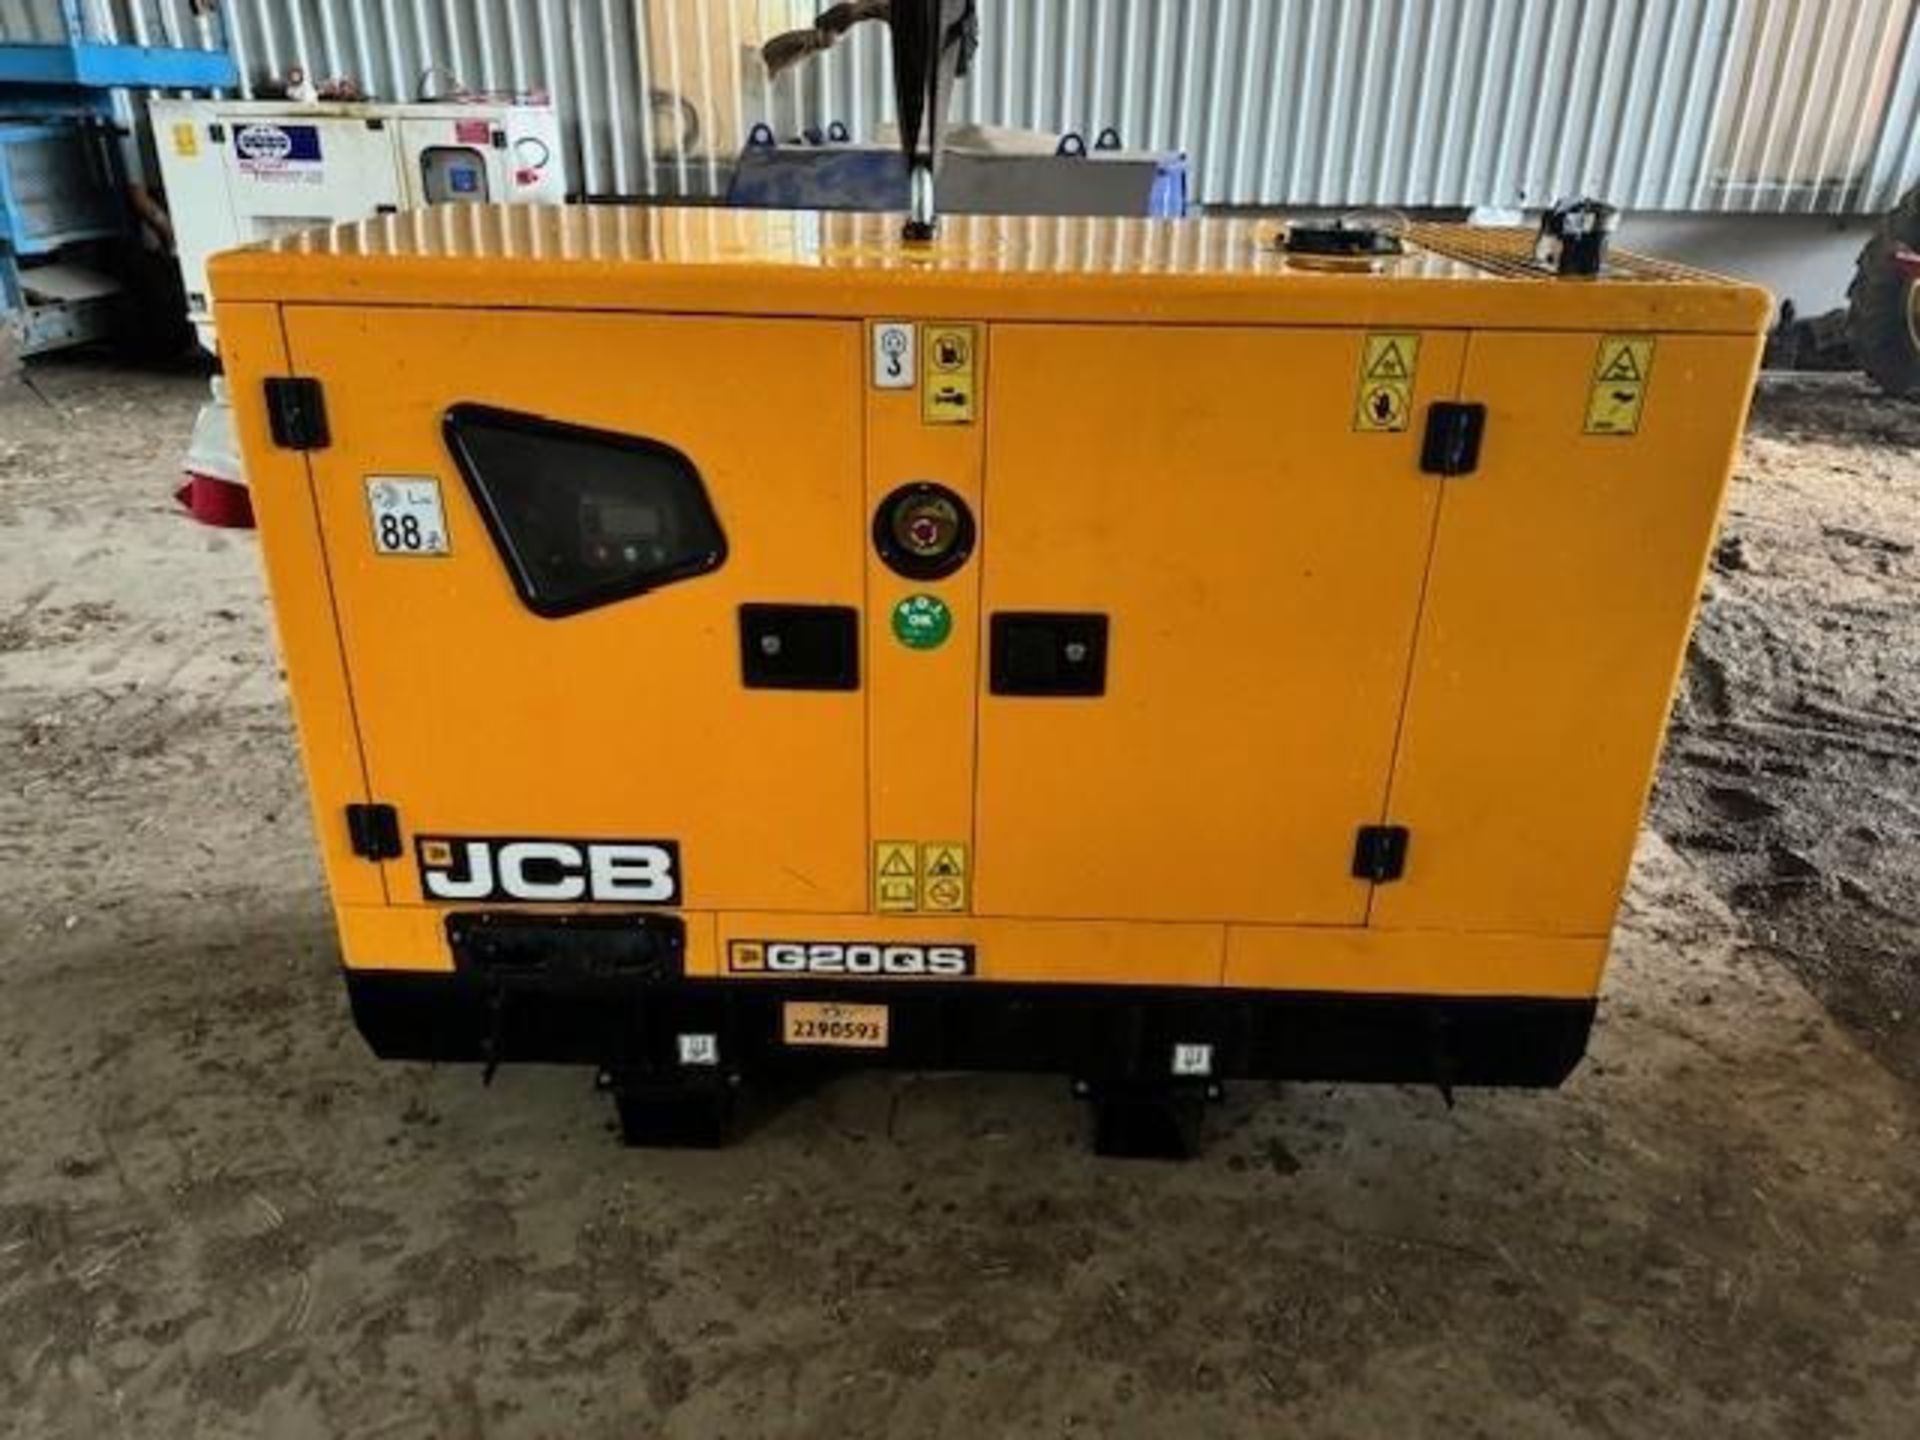 2018 JCB G20QS Generator - (Norfolk) - Image 2 of 5